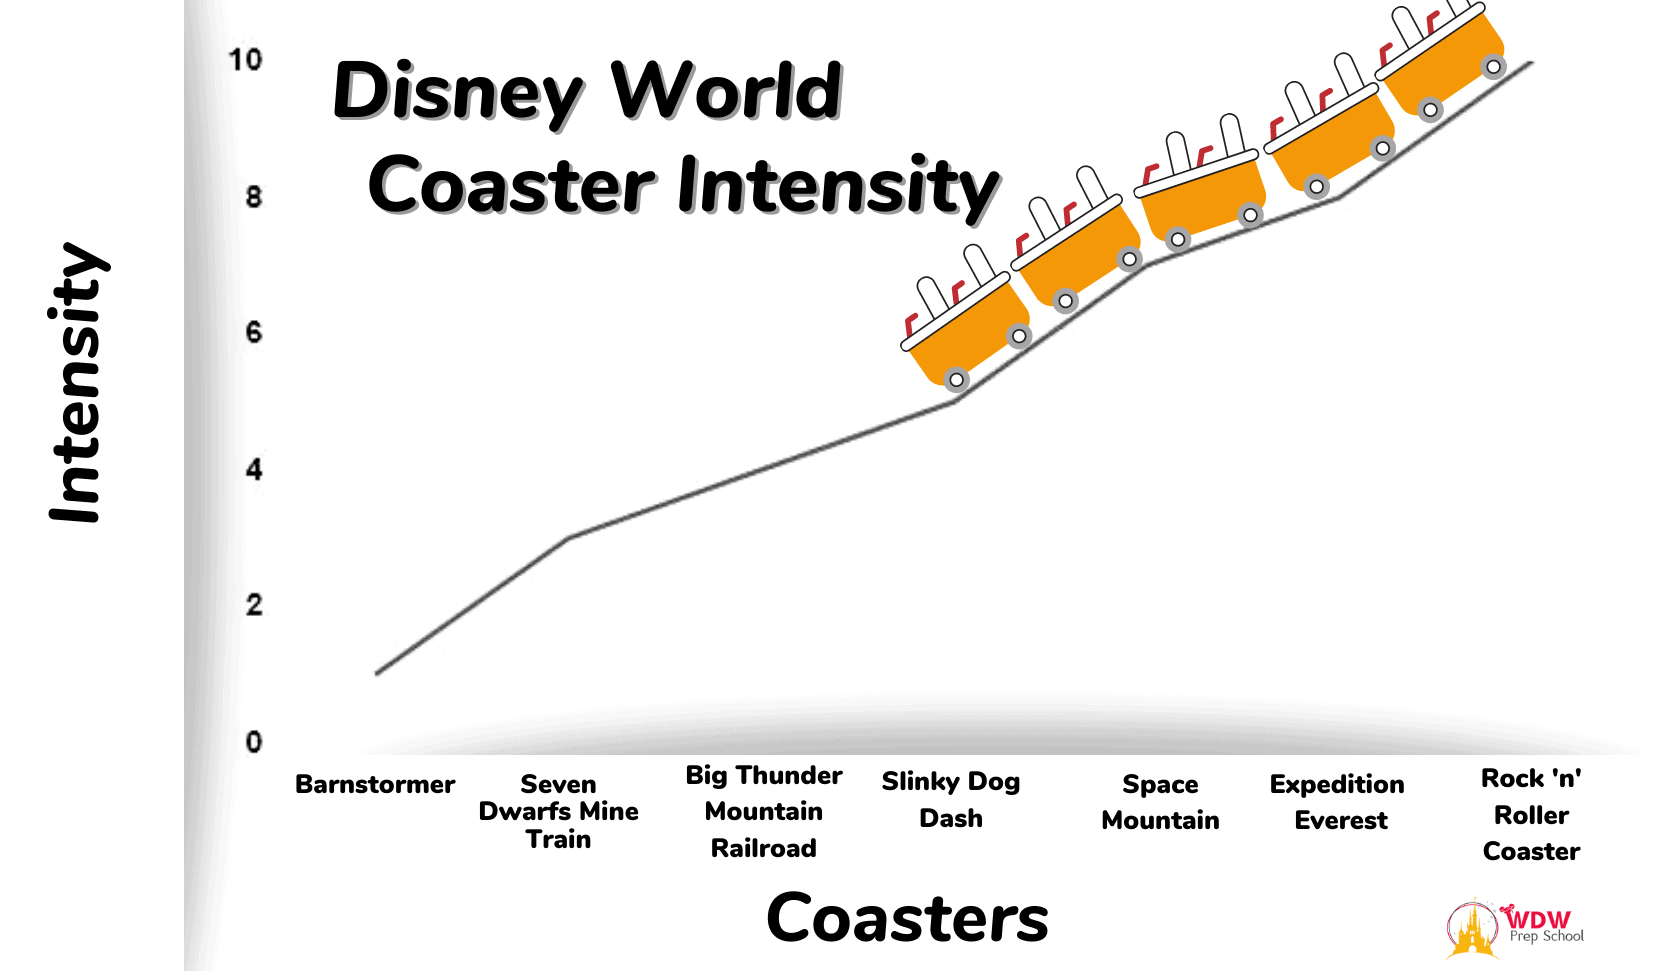 Coaster Intensity chart